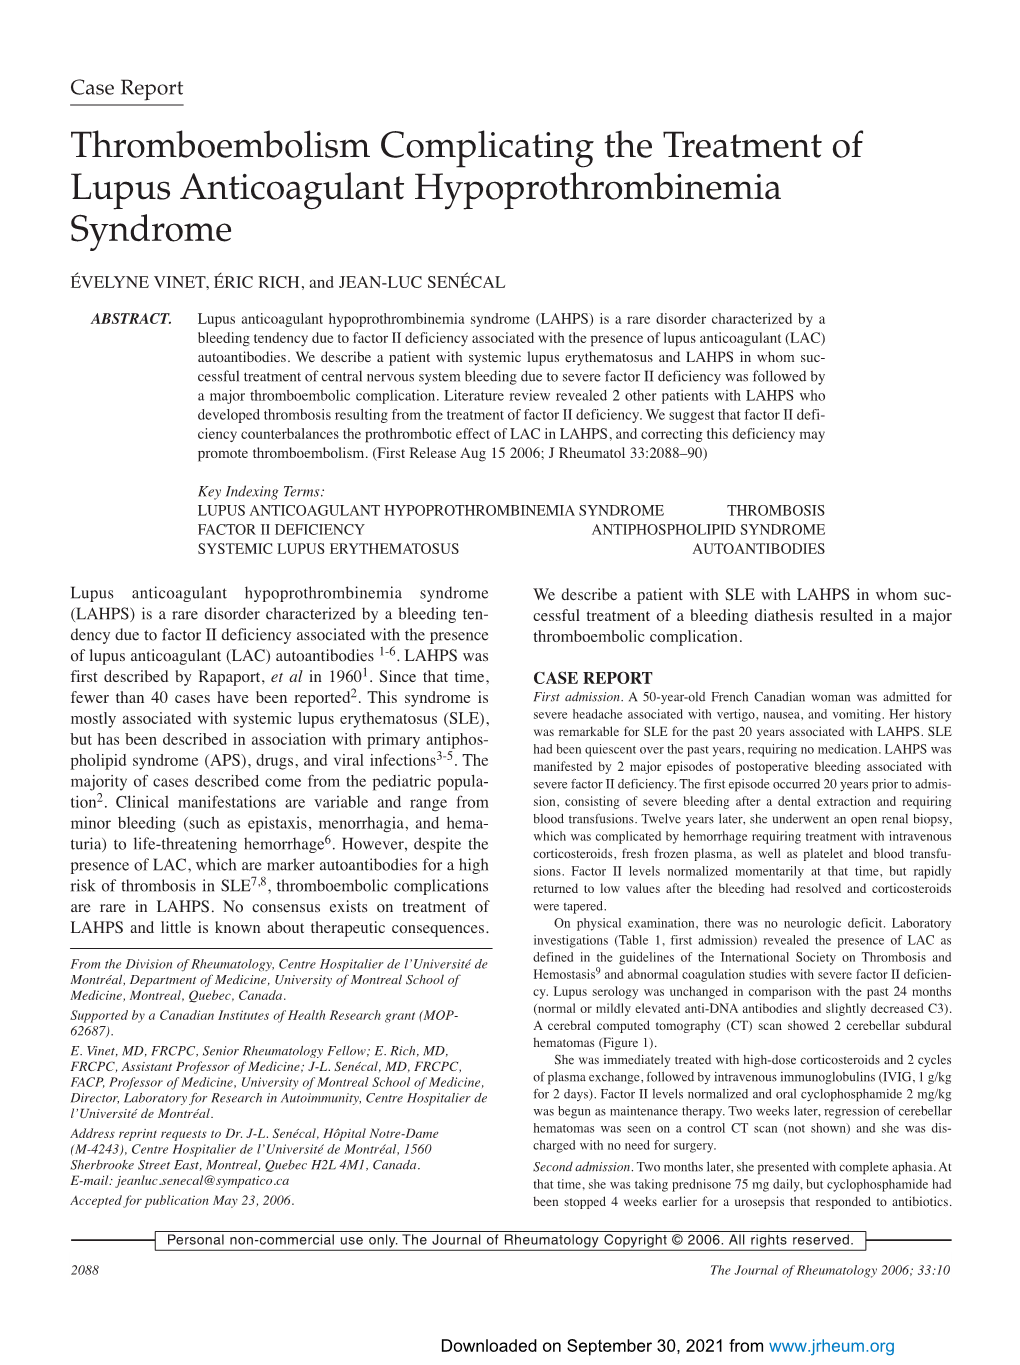 Thromboembolism Complicating the Treatment of Lupus Anticoagulant Hypoprothrombinemia Syndrome